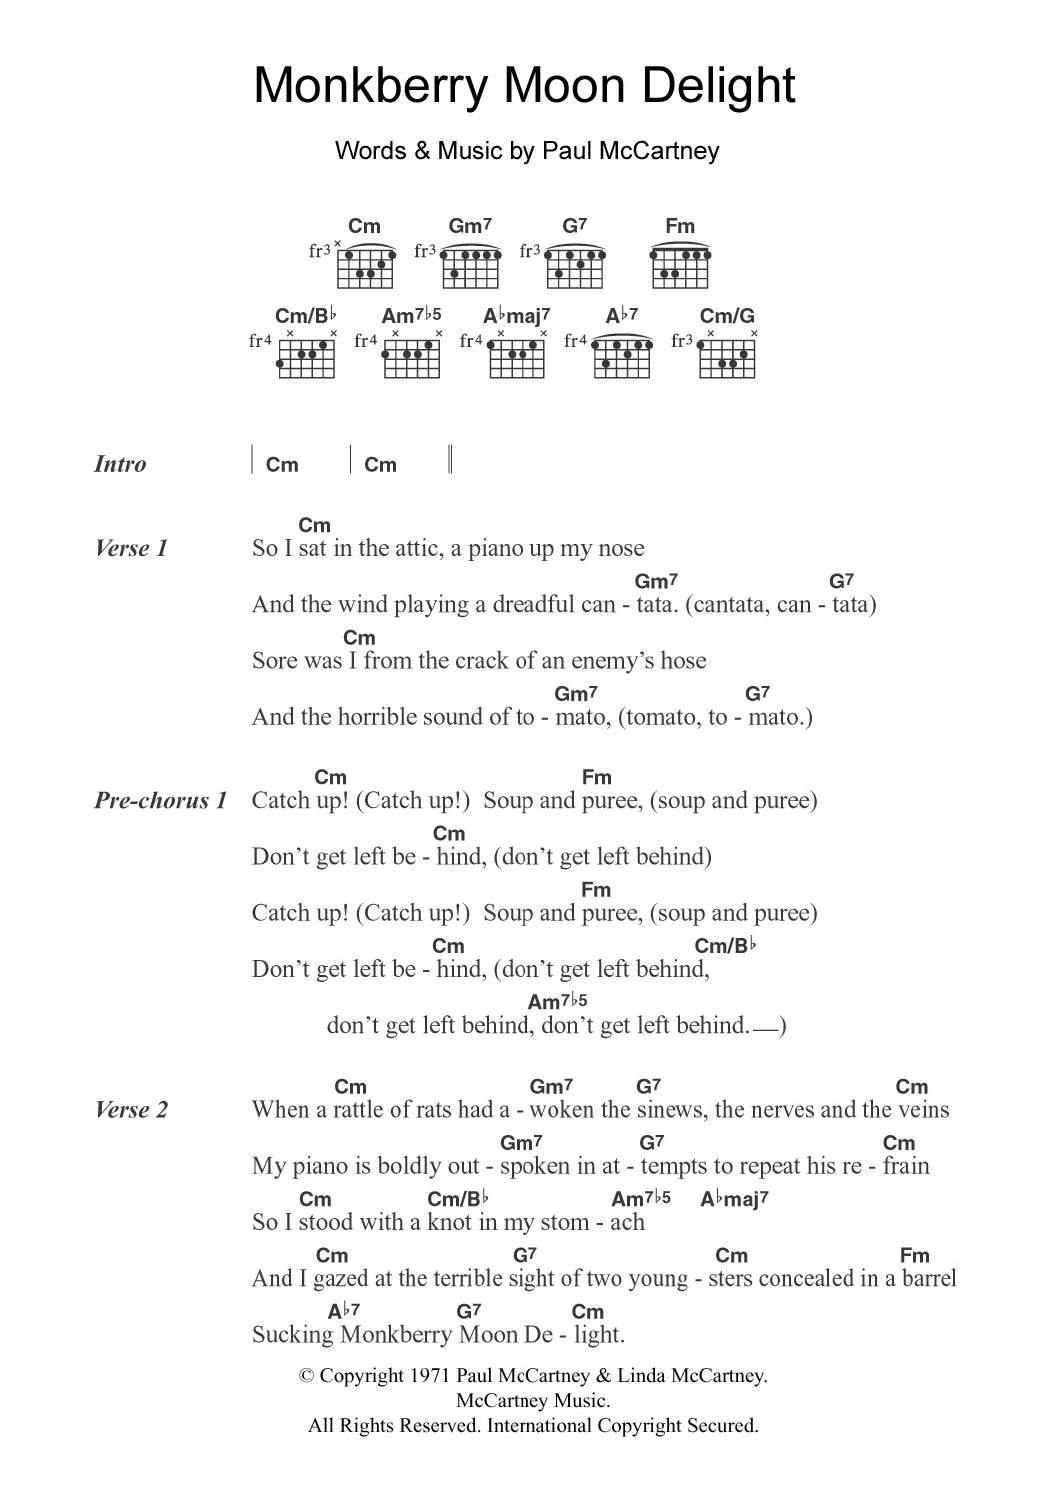 Paul McCartney Monkberry Moon Delight Sheet Music Notes & Chords for Guitar Chords/Lyrics - Download or Print PDF